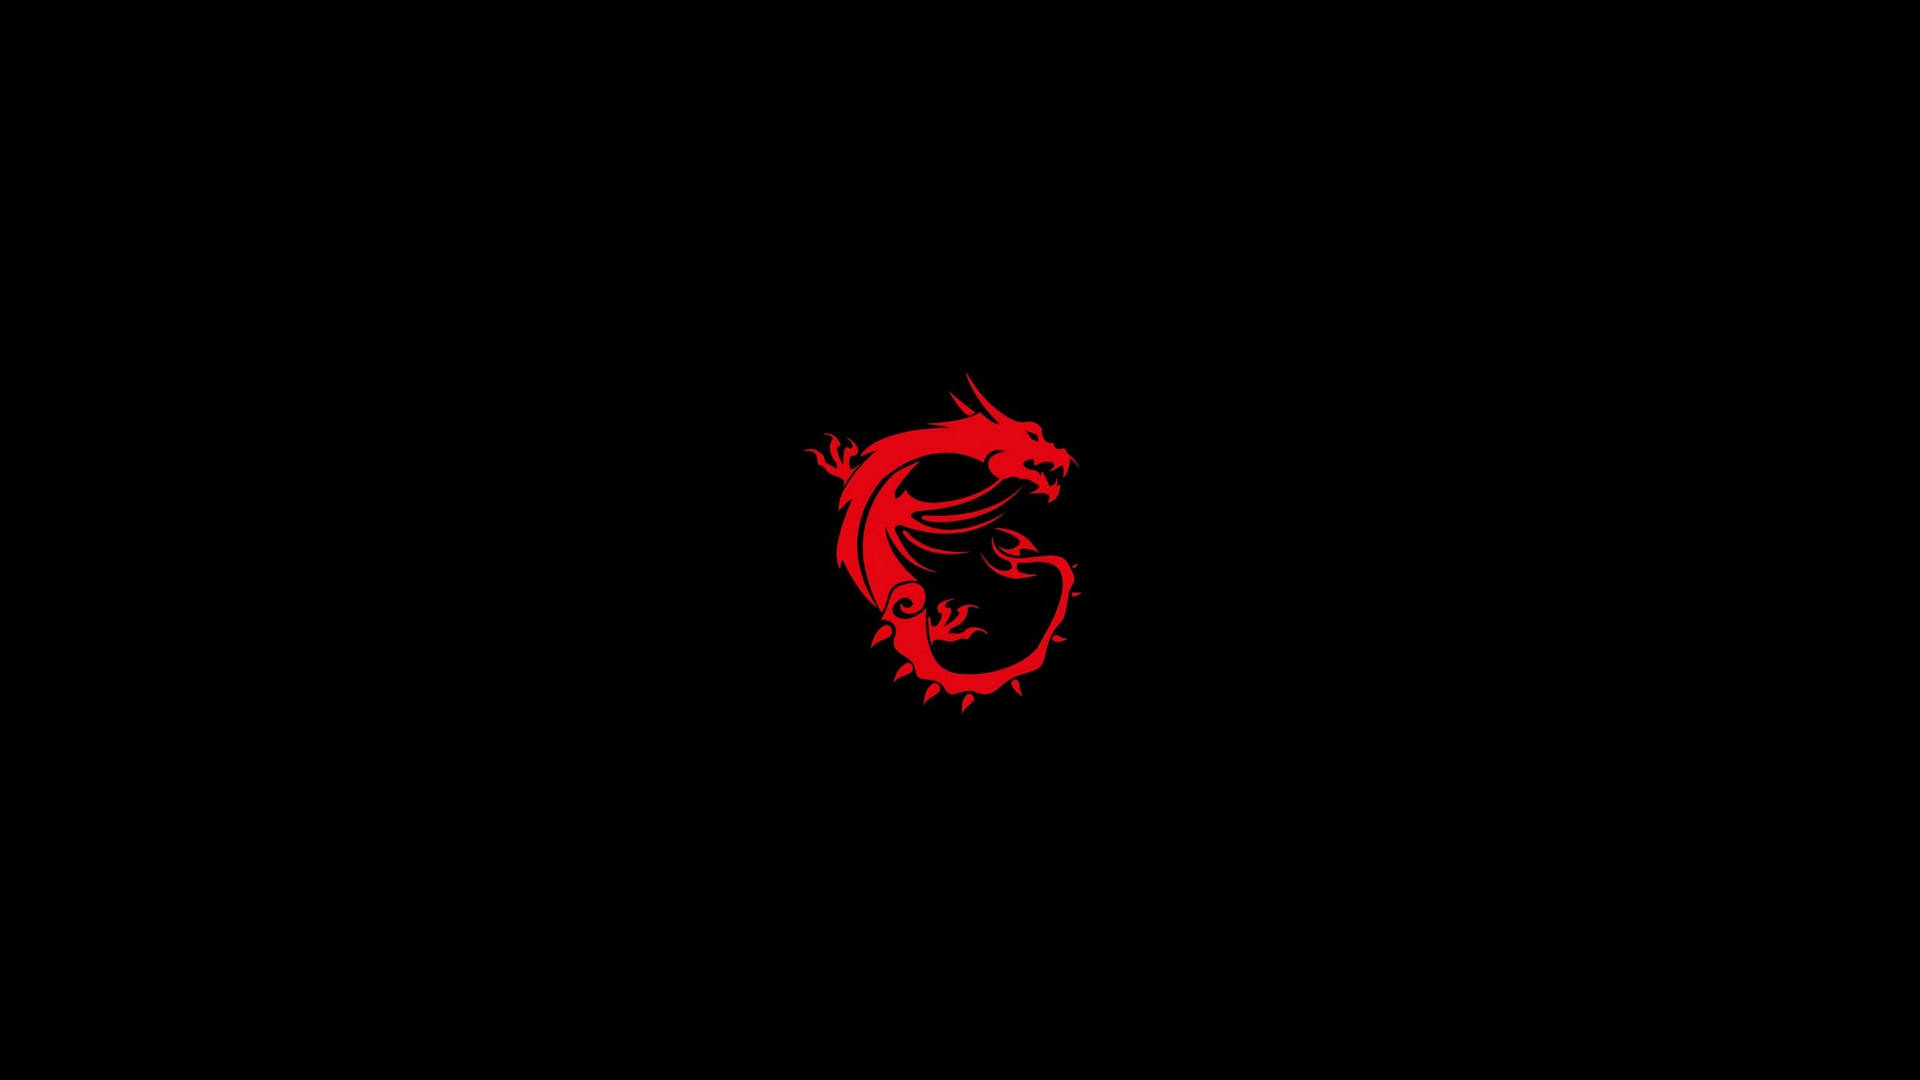 Minimalist Msi Red Dragon Background